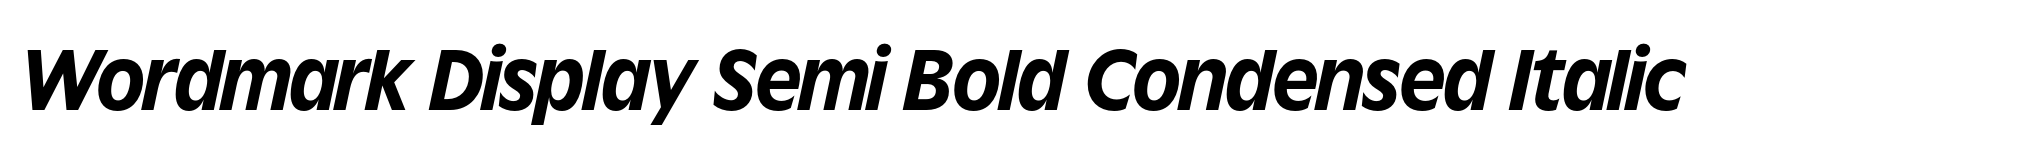 Wordmark Display Semi Bold Condensed Italic image